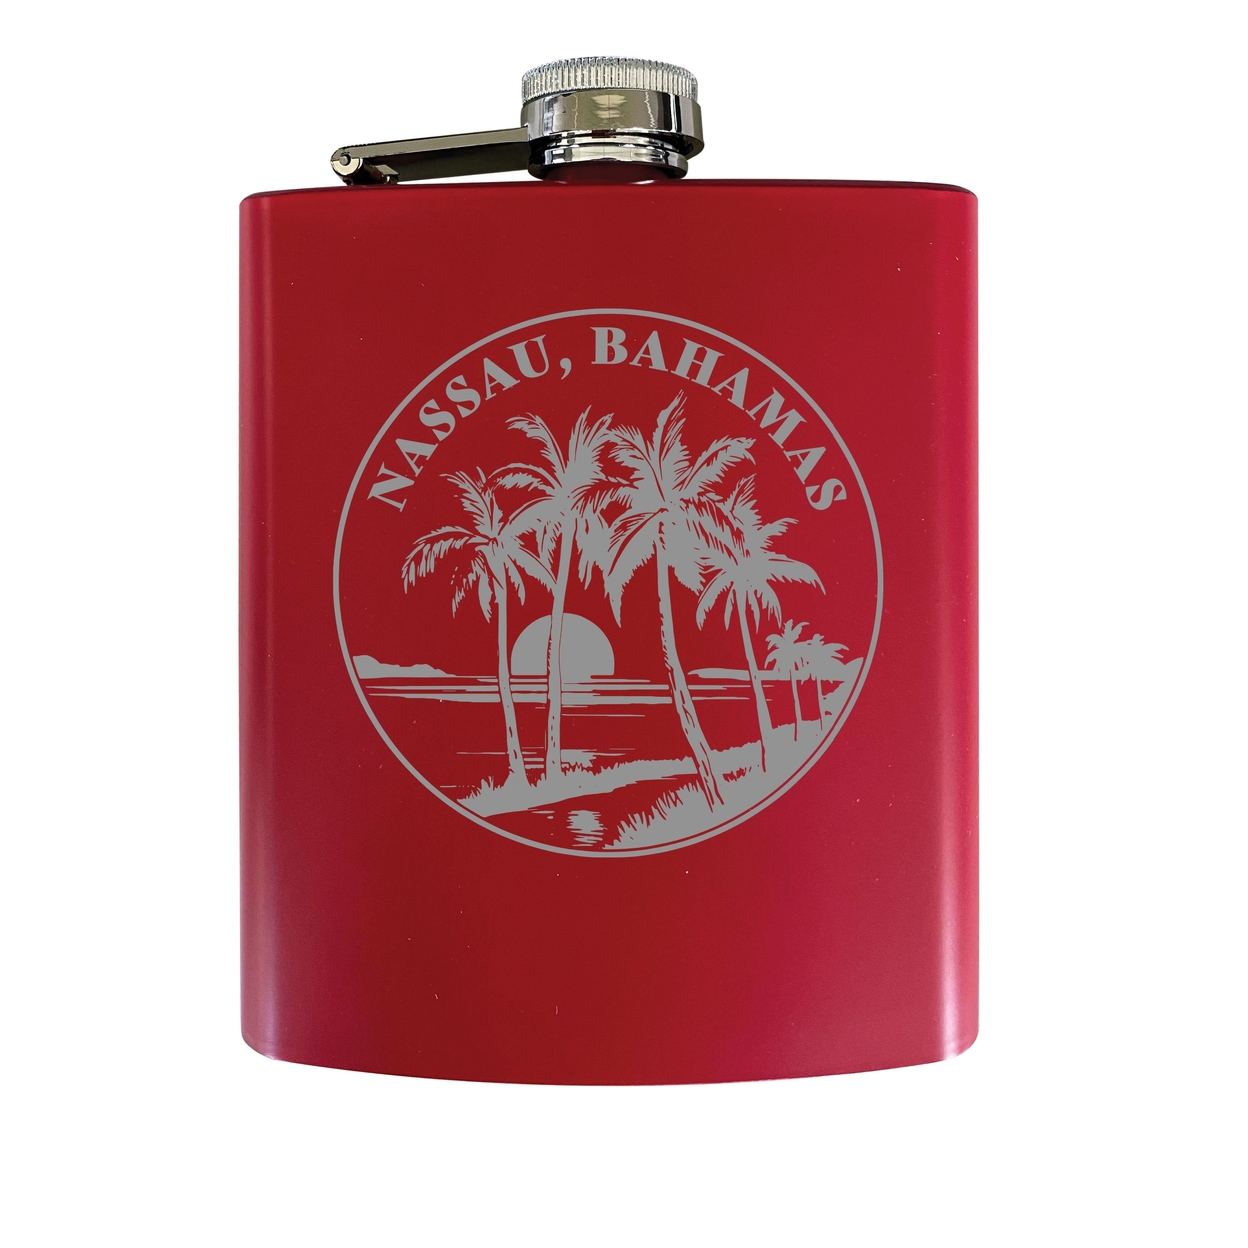 Nassau The Bahamas Souvenir 7 Oz Engraved Steel Flask Matte Finish - Black,,2-Pack